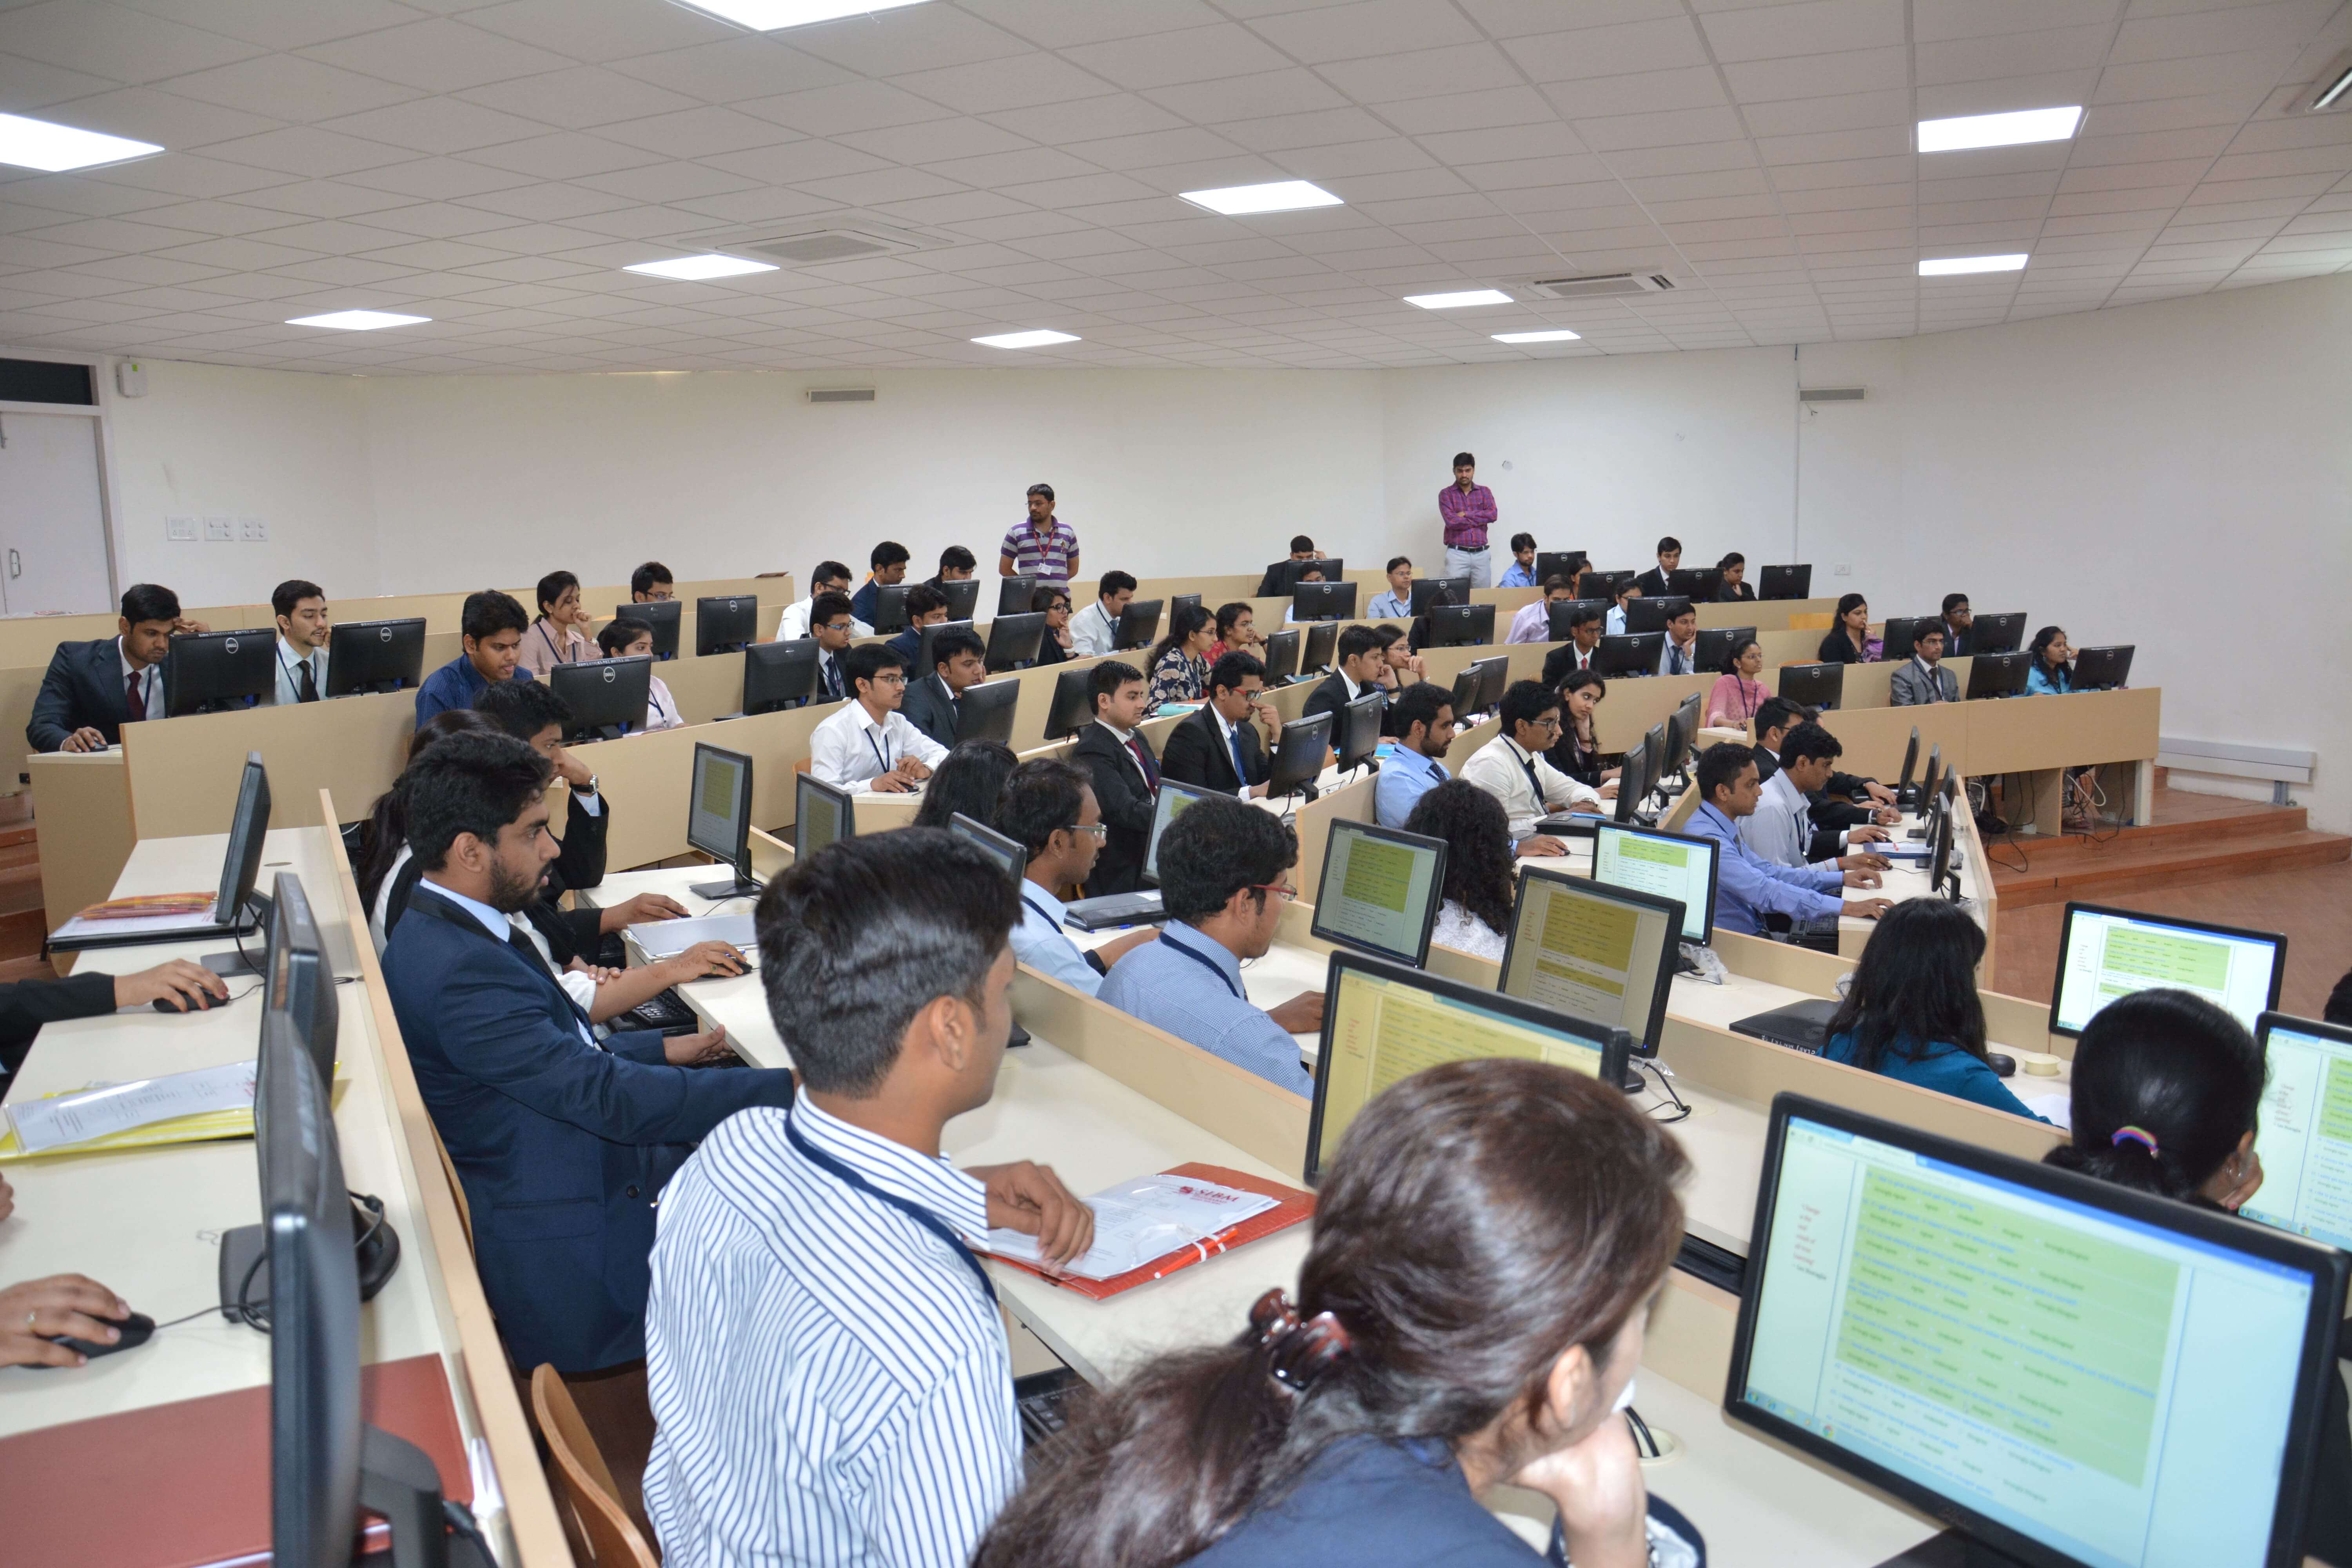 Modern Computer Lab - SIBM Hyderabad